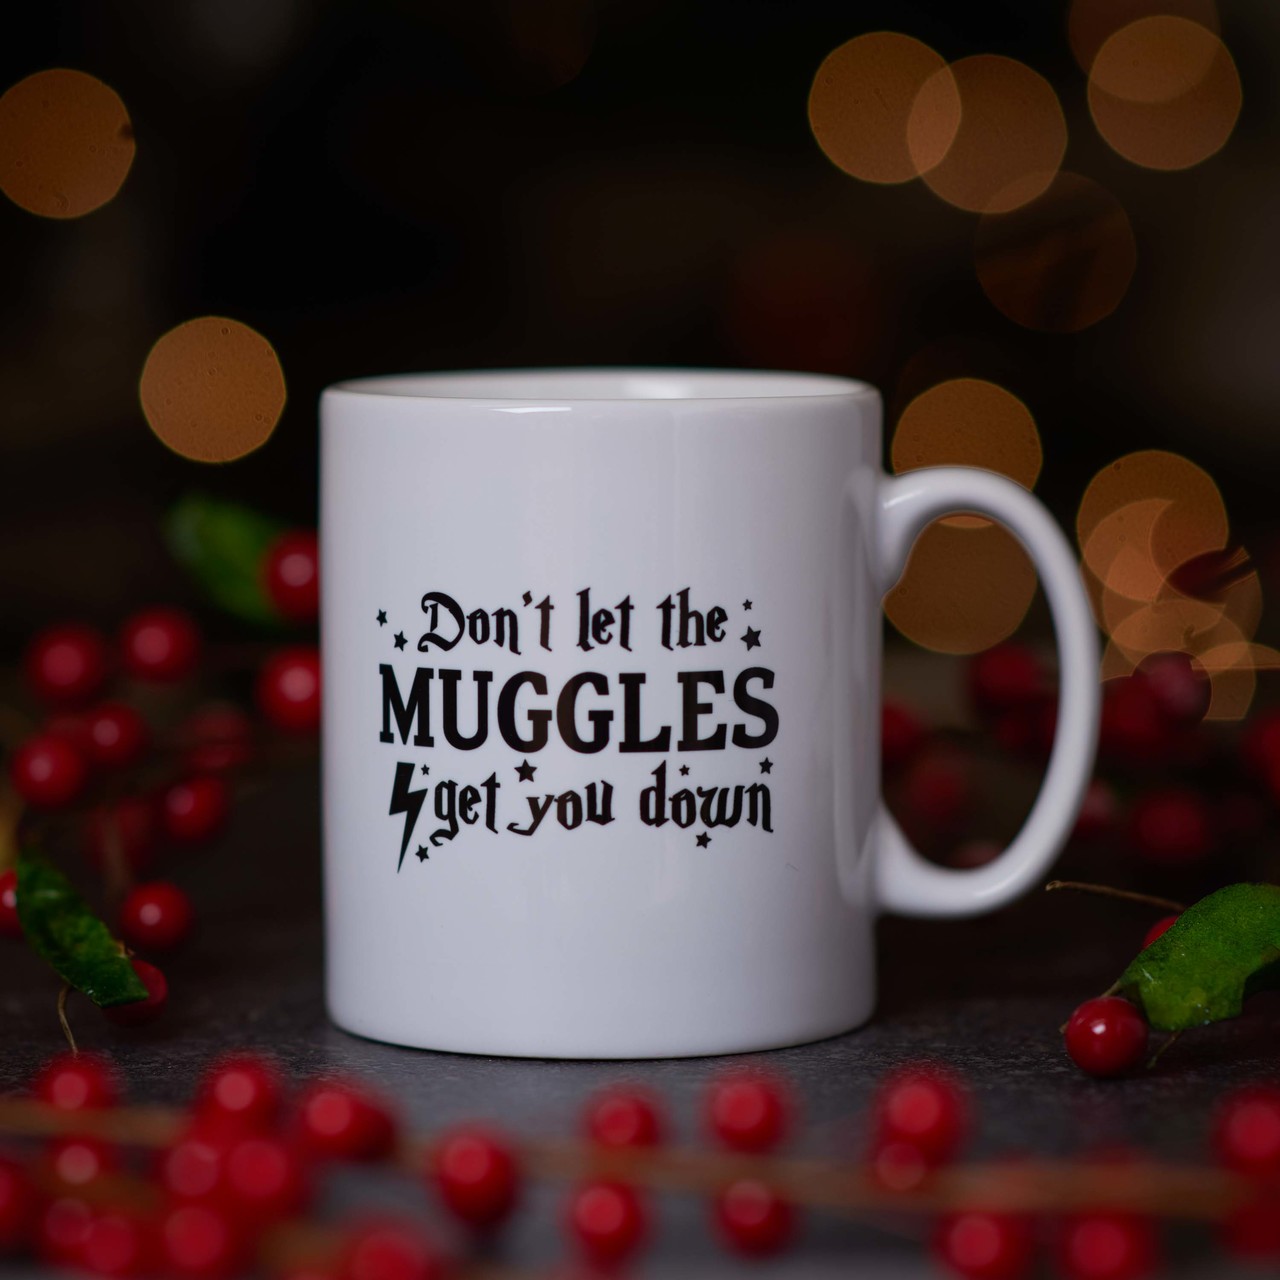 Don’t let the muggles get you down mug.